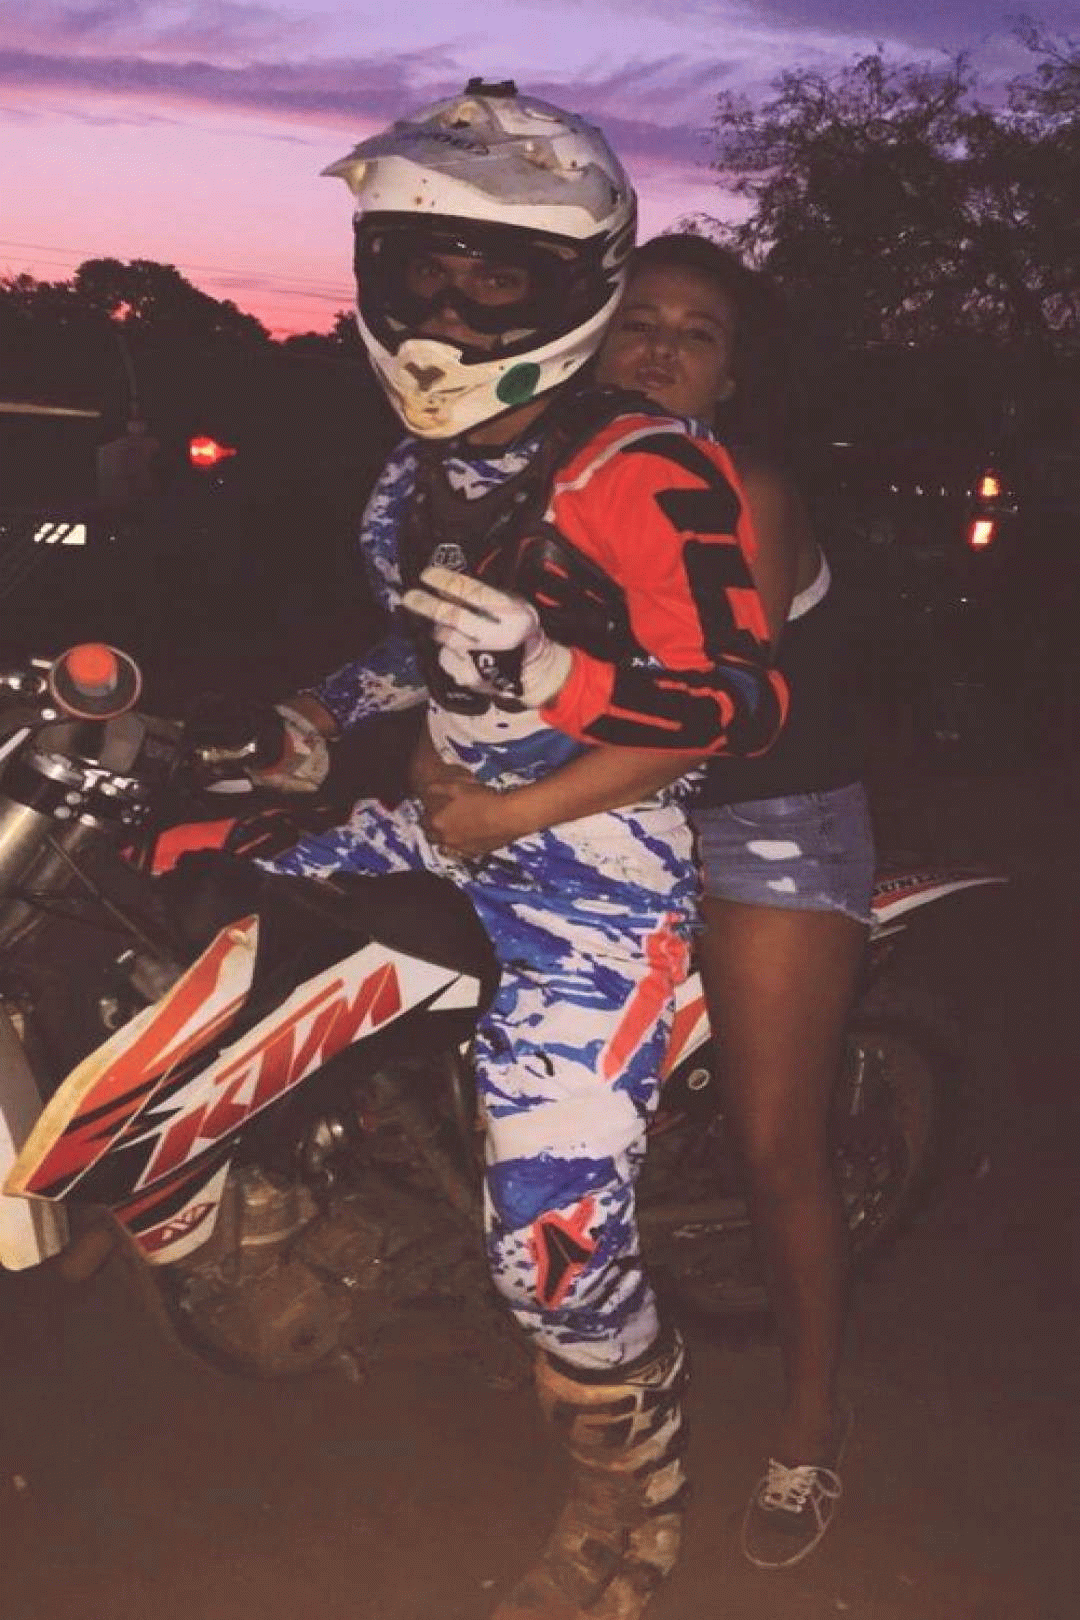 boy hot and motocross bild in 2020 relationship goals medium